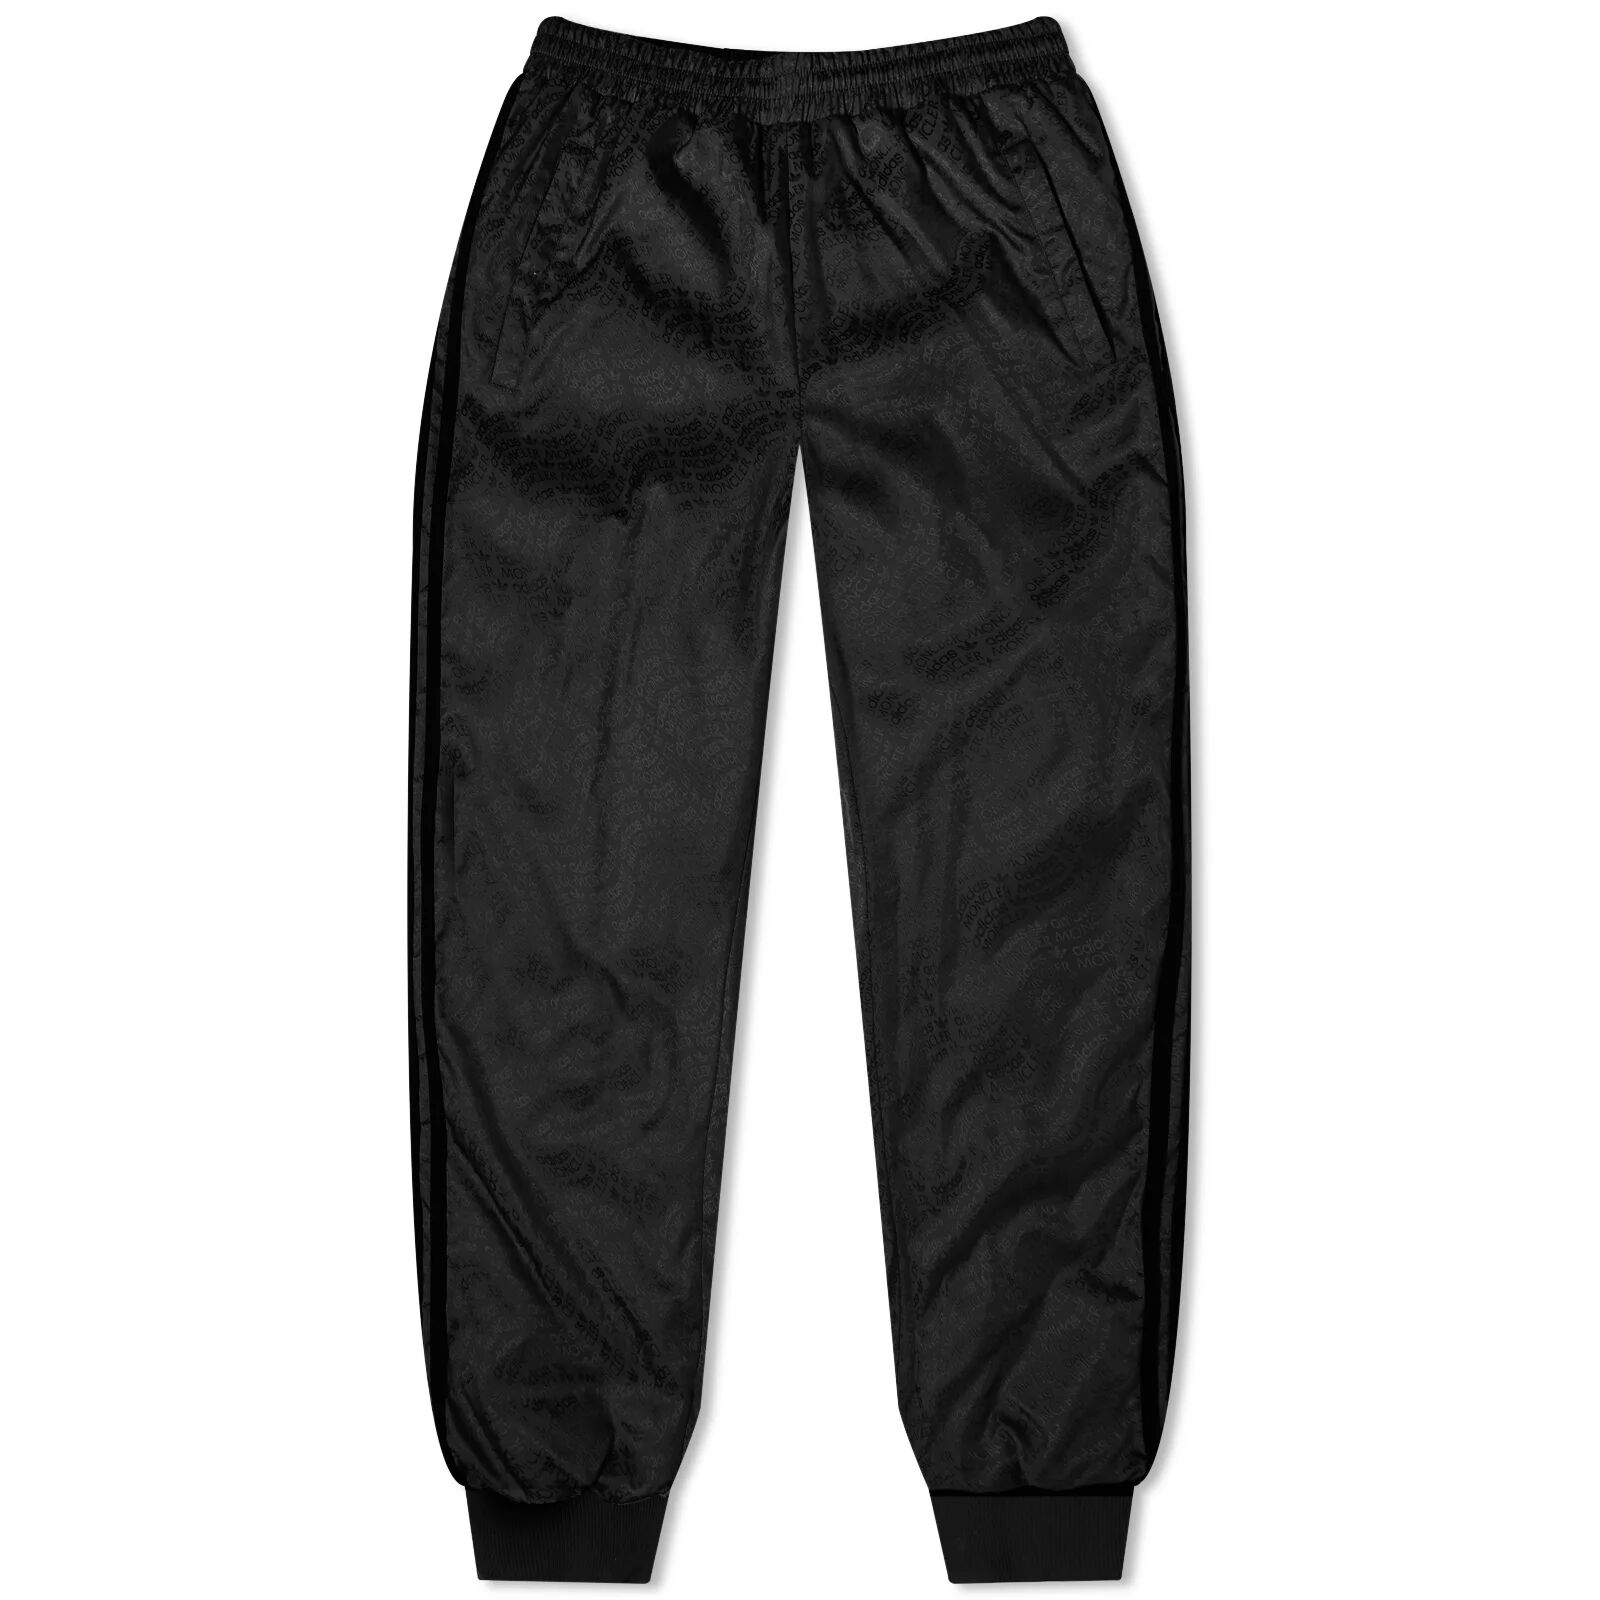 Moncler Men's x adidas Originals Reversible Down Trousers in Black, Size Large